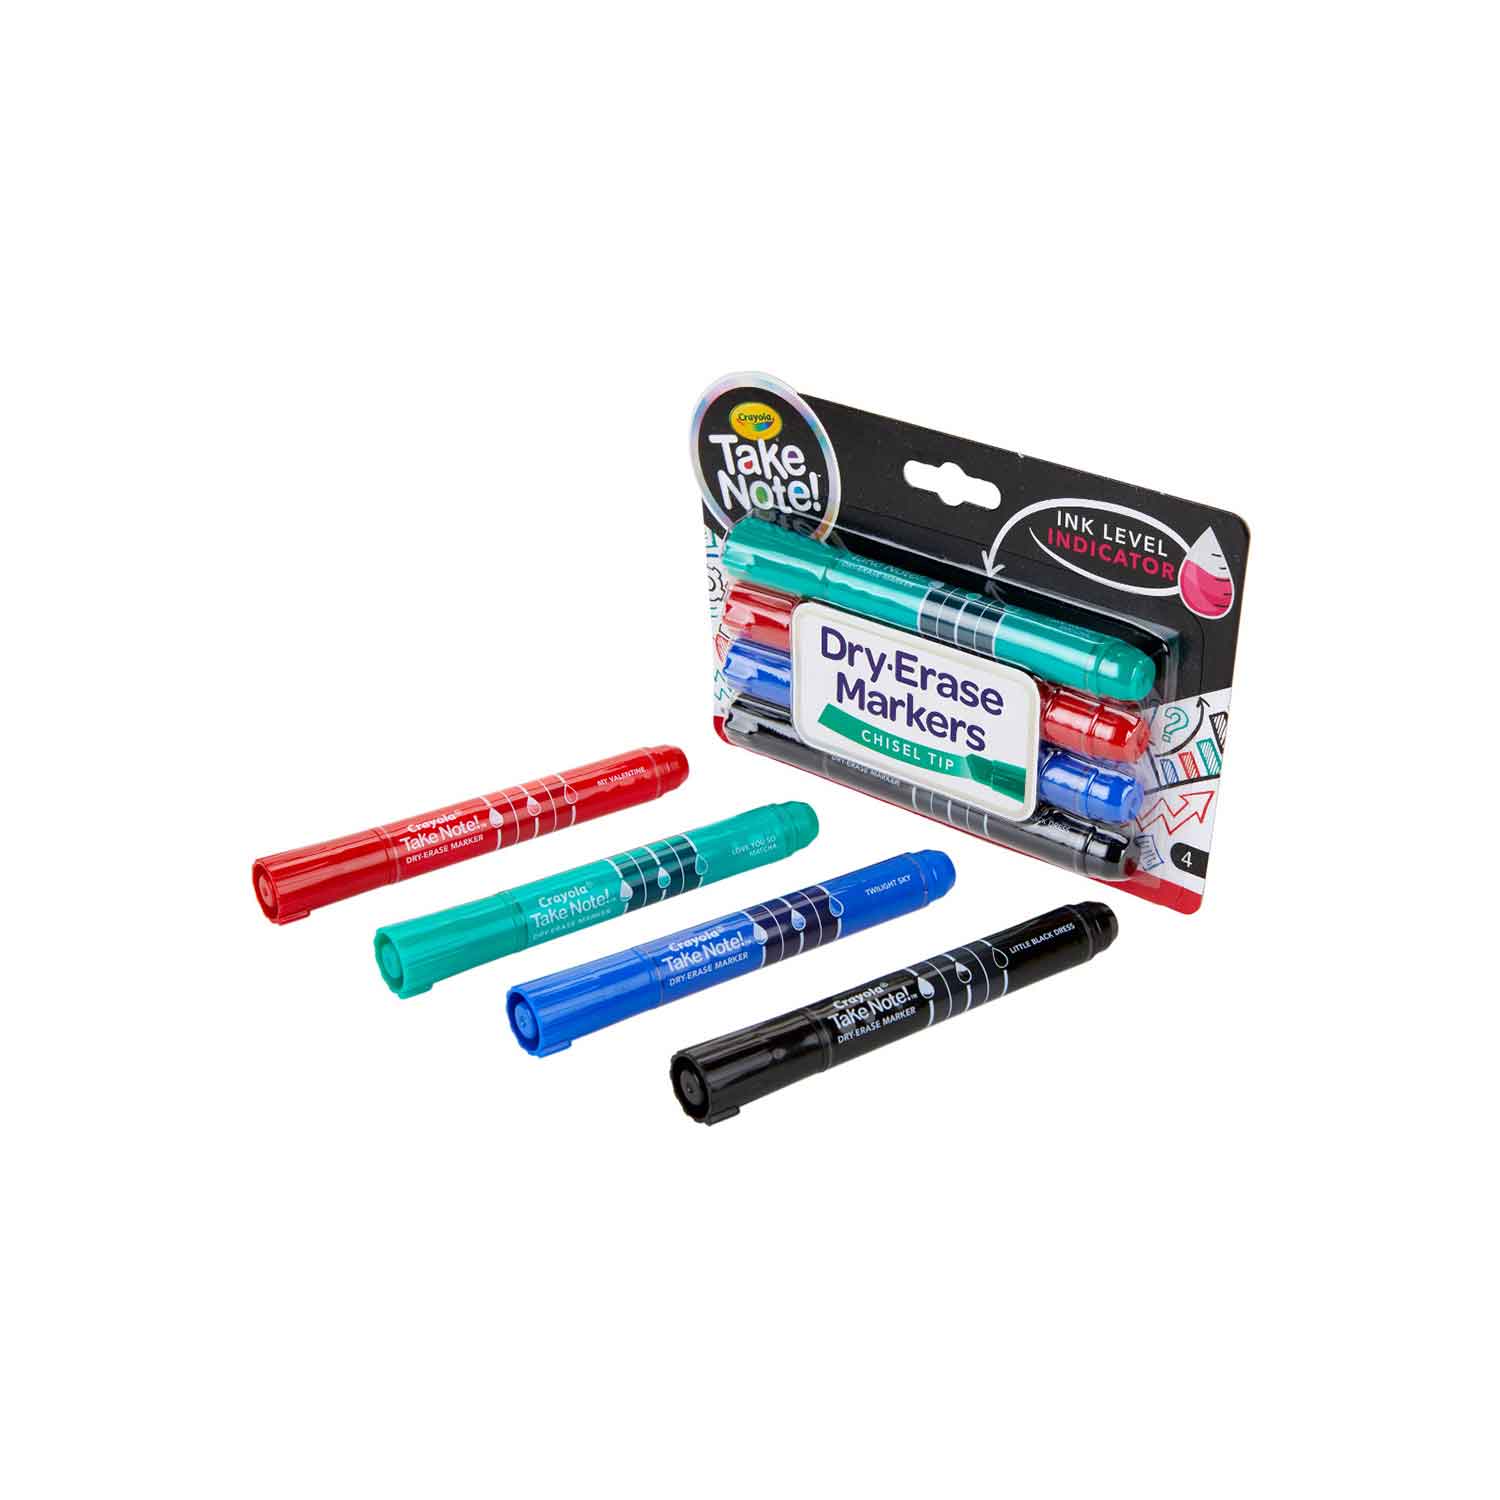 Crayola Whiteboard and Markers Set (Crayola Erase Board Set)